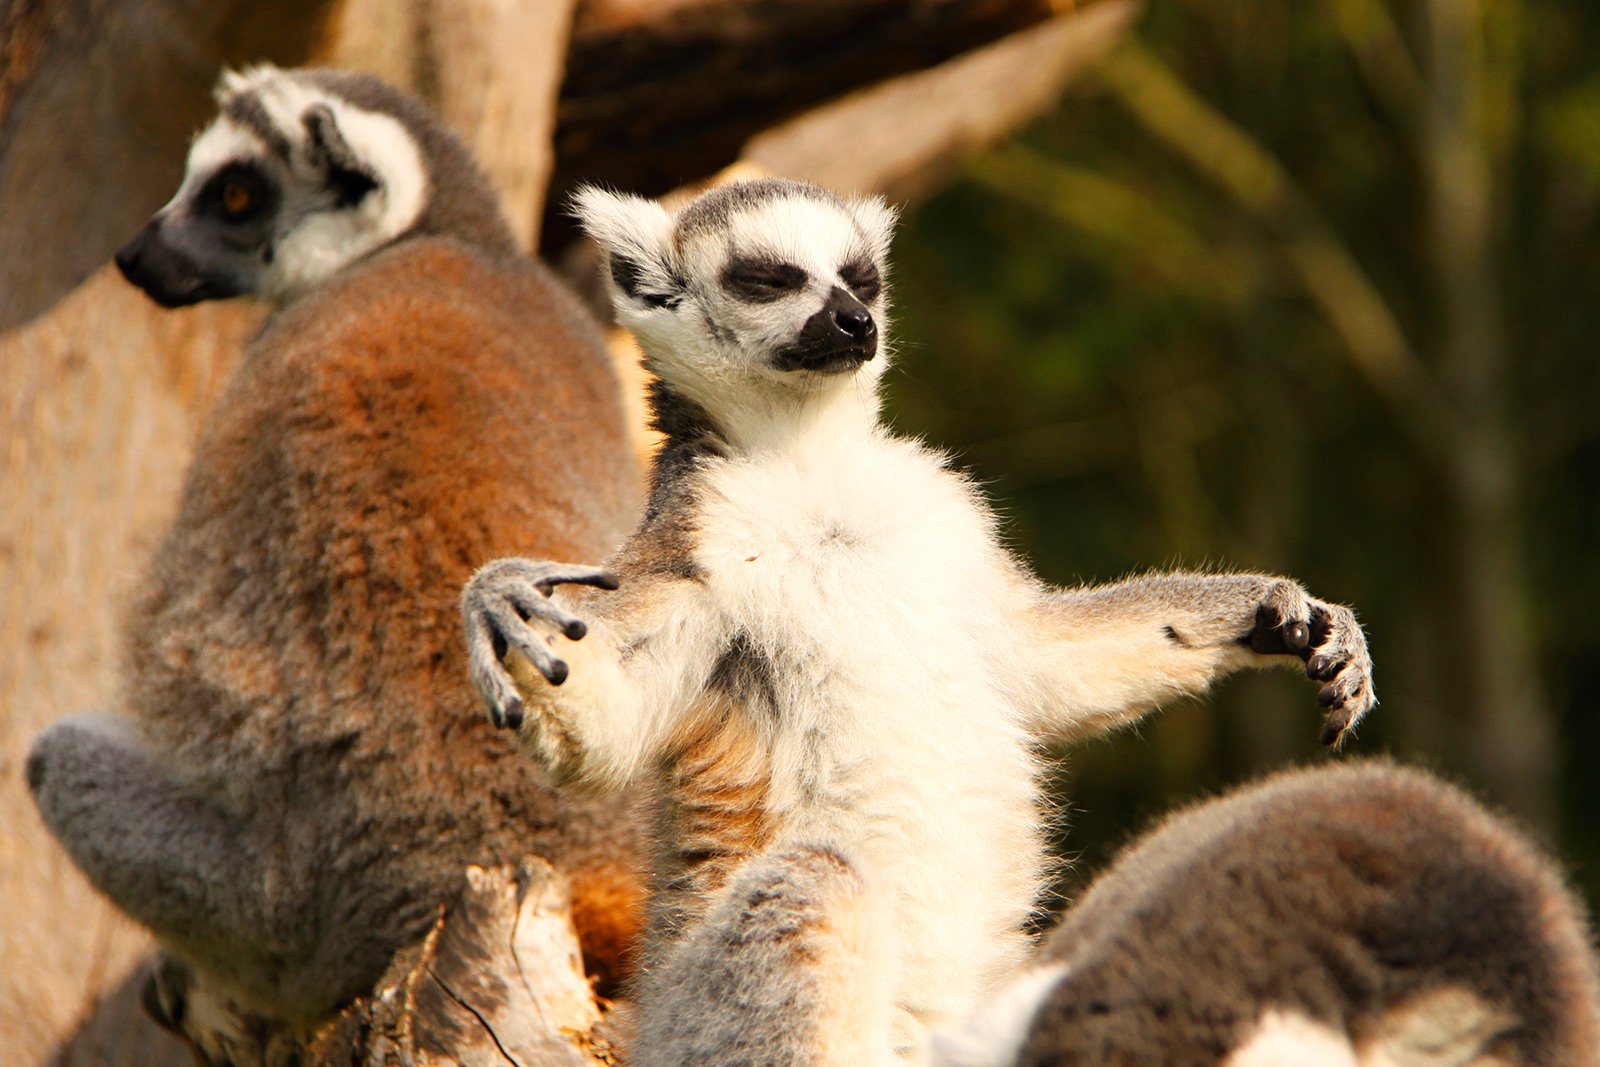 How to see a lemur in Antananarivo